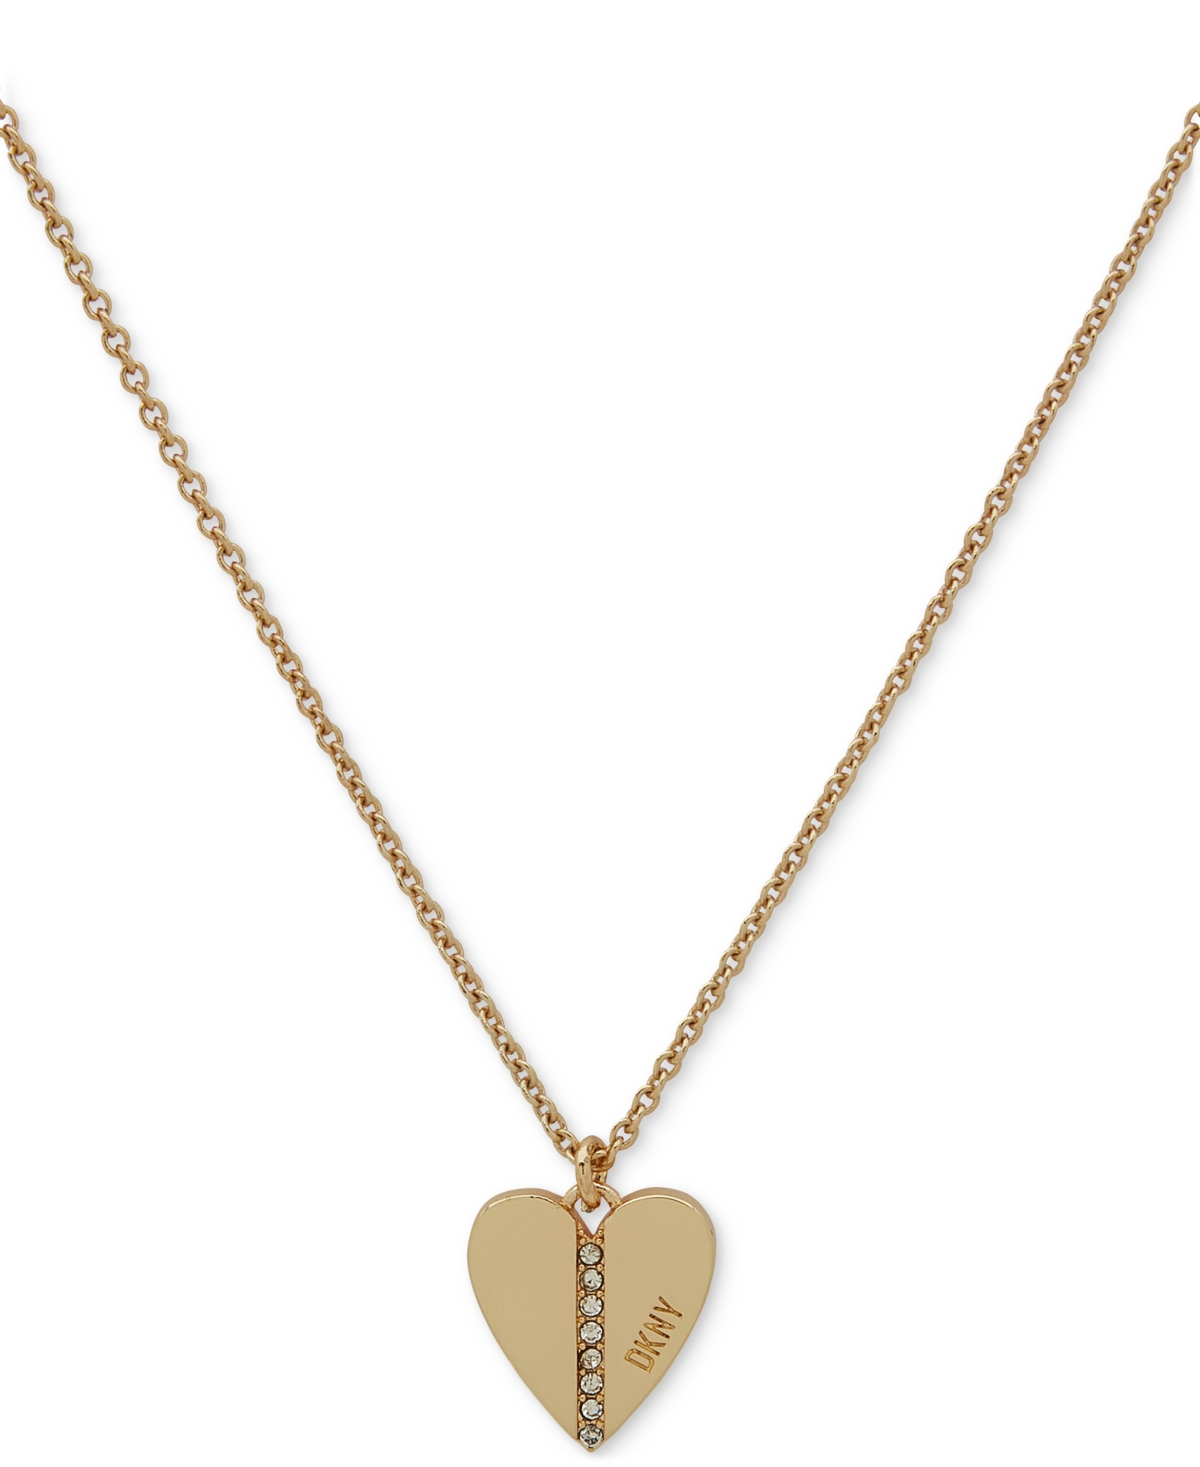 Gold-Tone Pave Logo Heart Pendant Necklace, 16" + 3" extender - Multi